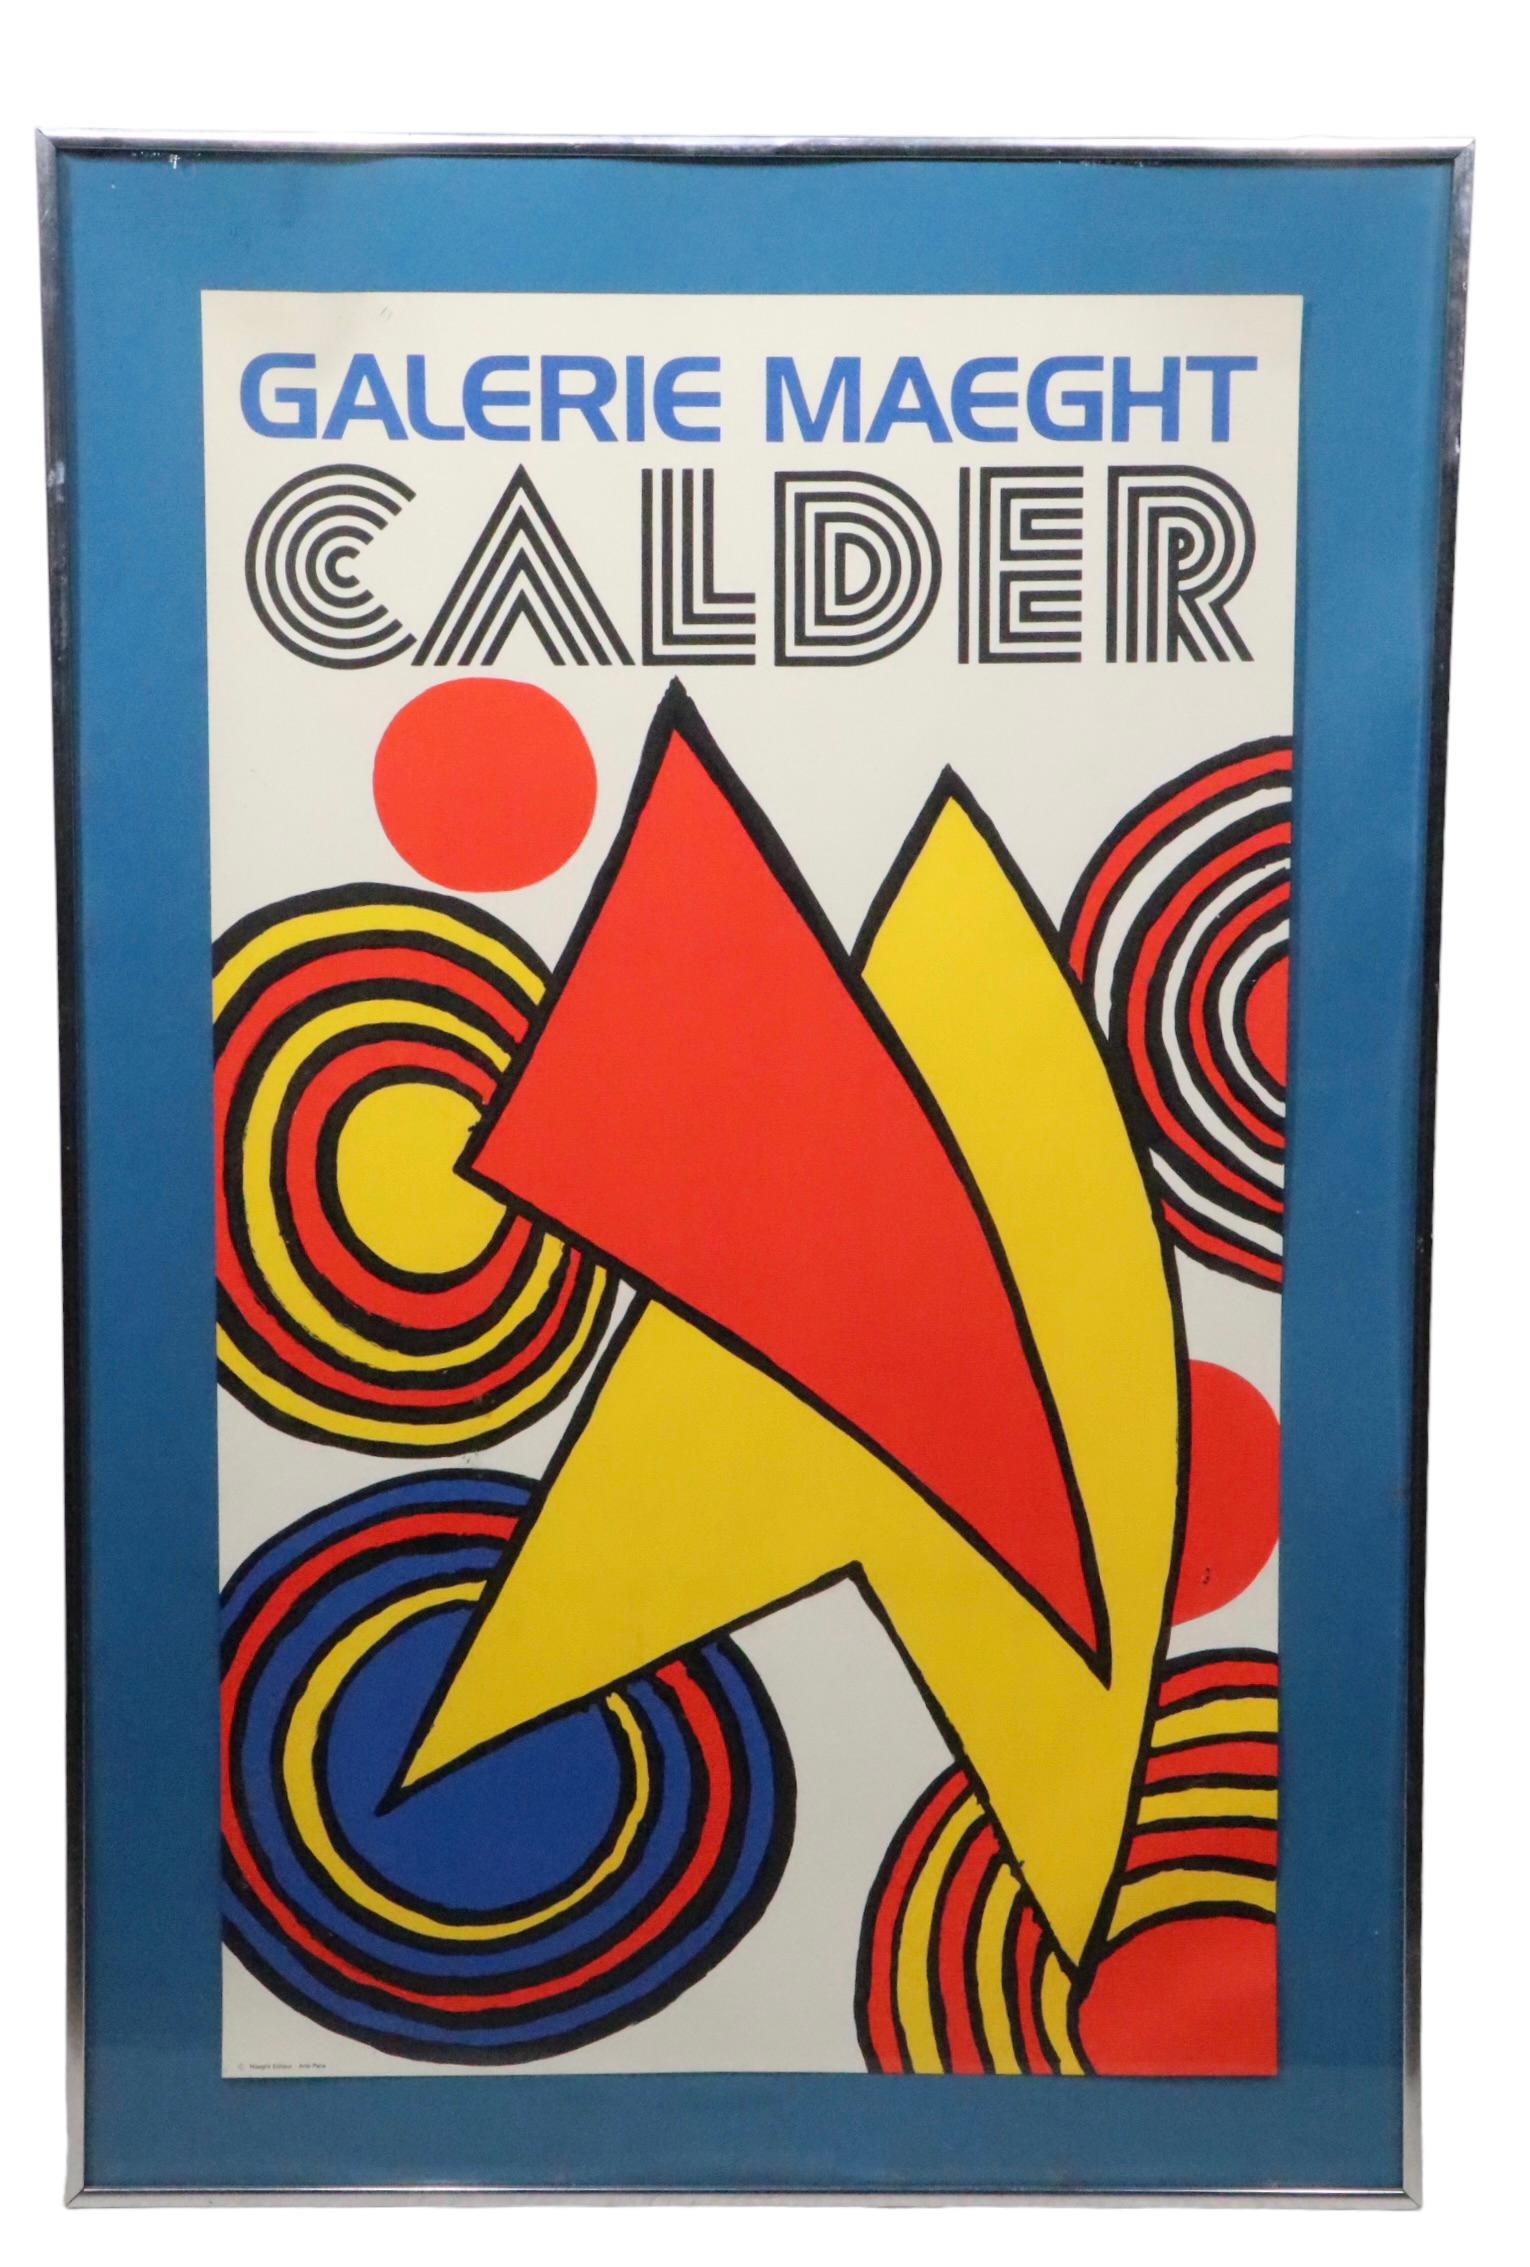  Framed Calder Galerie Maeght Lithograph  Poster Maeght Editeur - Arte Paris 70s For Sale 3